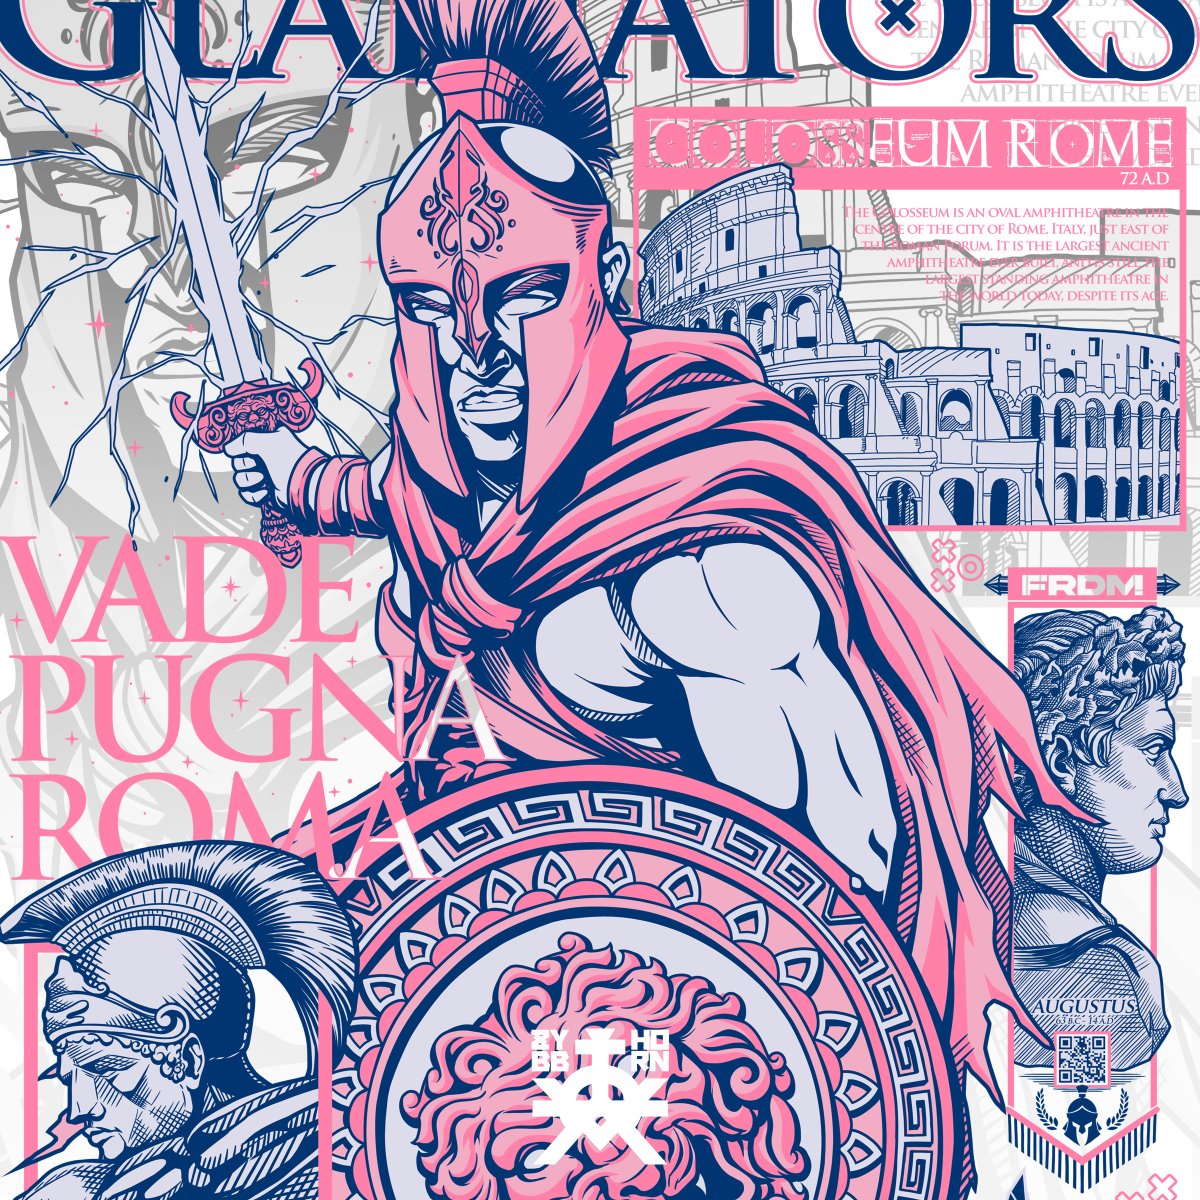 ROME GLADIATORS 

old commission art
#spartan #gladiators #clothingdesigner #clothingdesign #apparel #appareldesign #tshirtdesign #tshirtdesigner #nft #nftcommunity  #nftcollectors  #NFTartist